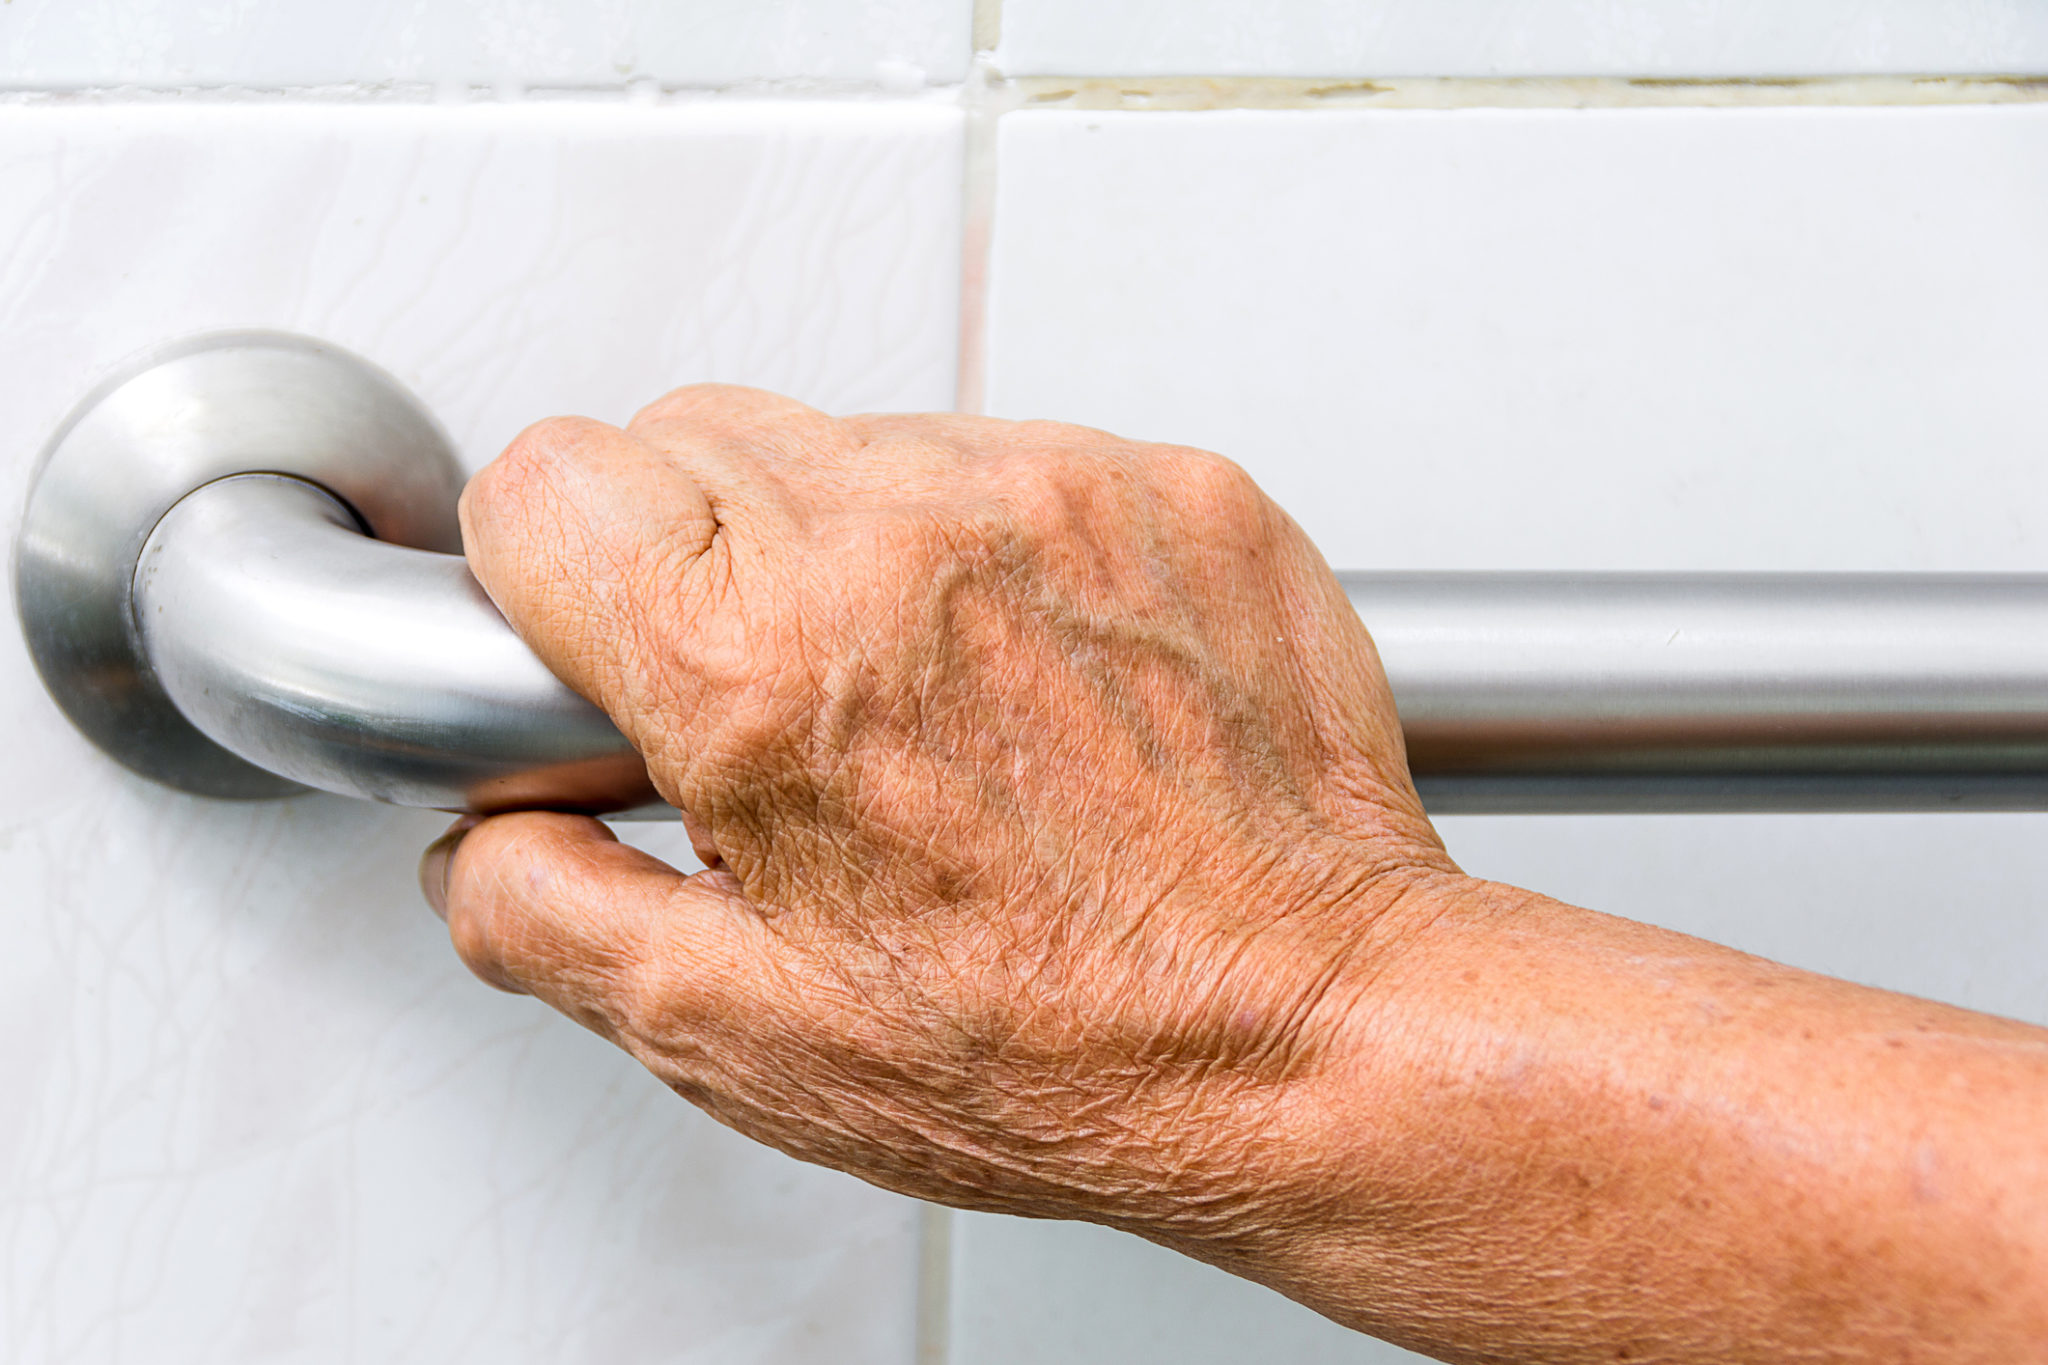 elderly holding a grab bars in a bathroom